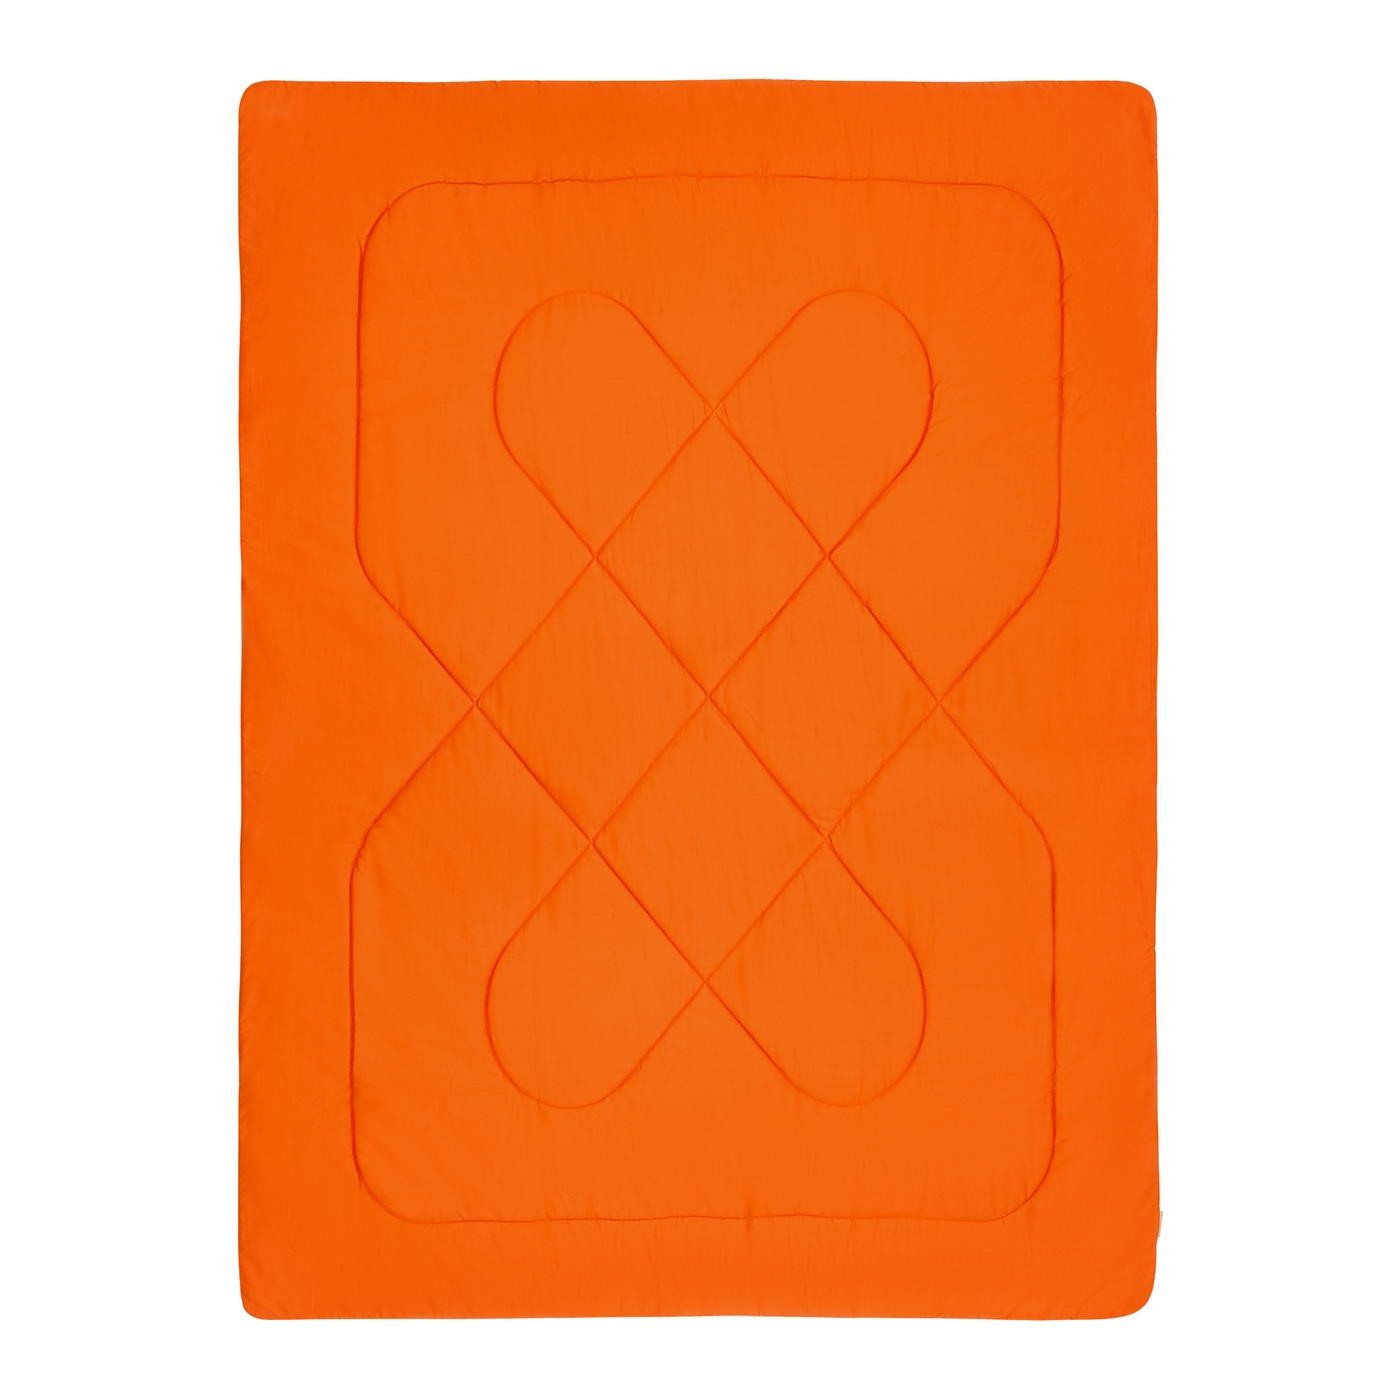 Premium Mako (оранжевый) Одеяло 220х240